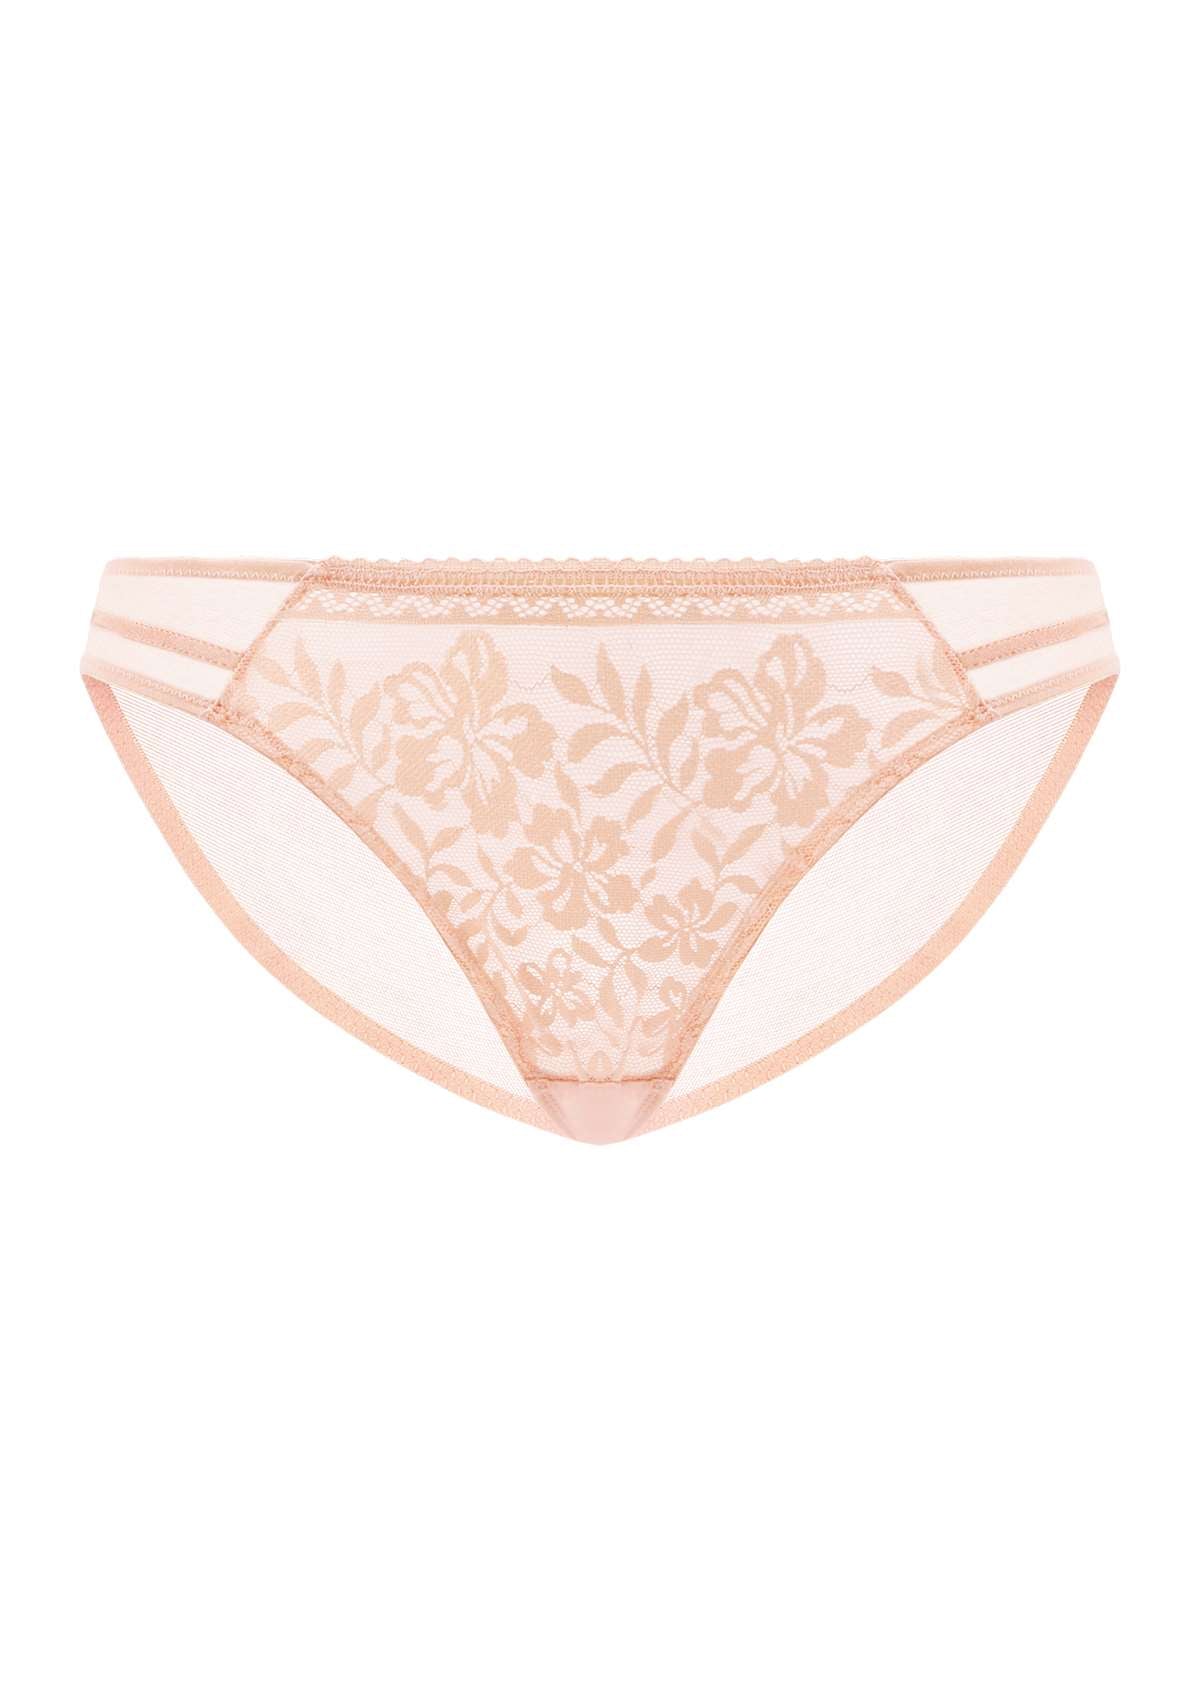 HSIA Gladioli Floral Lace Mesh Airy Elegant Beautiful Bikini Underwear - XXL / Peach